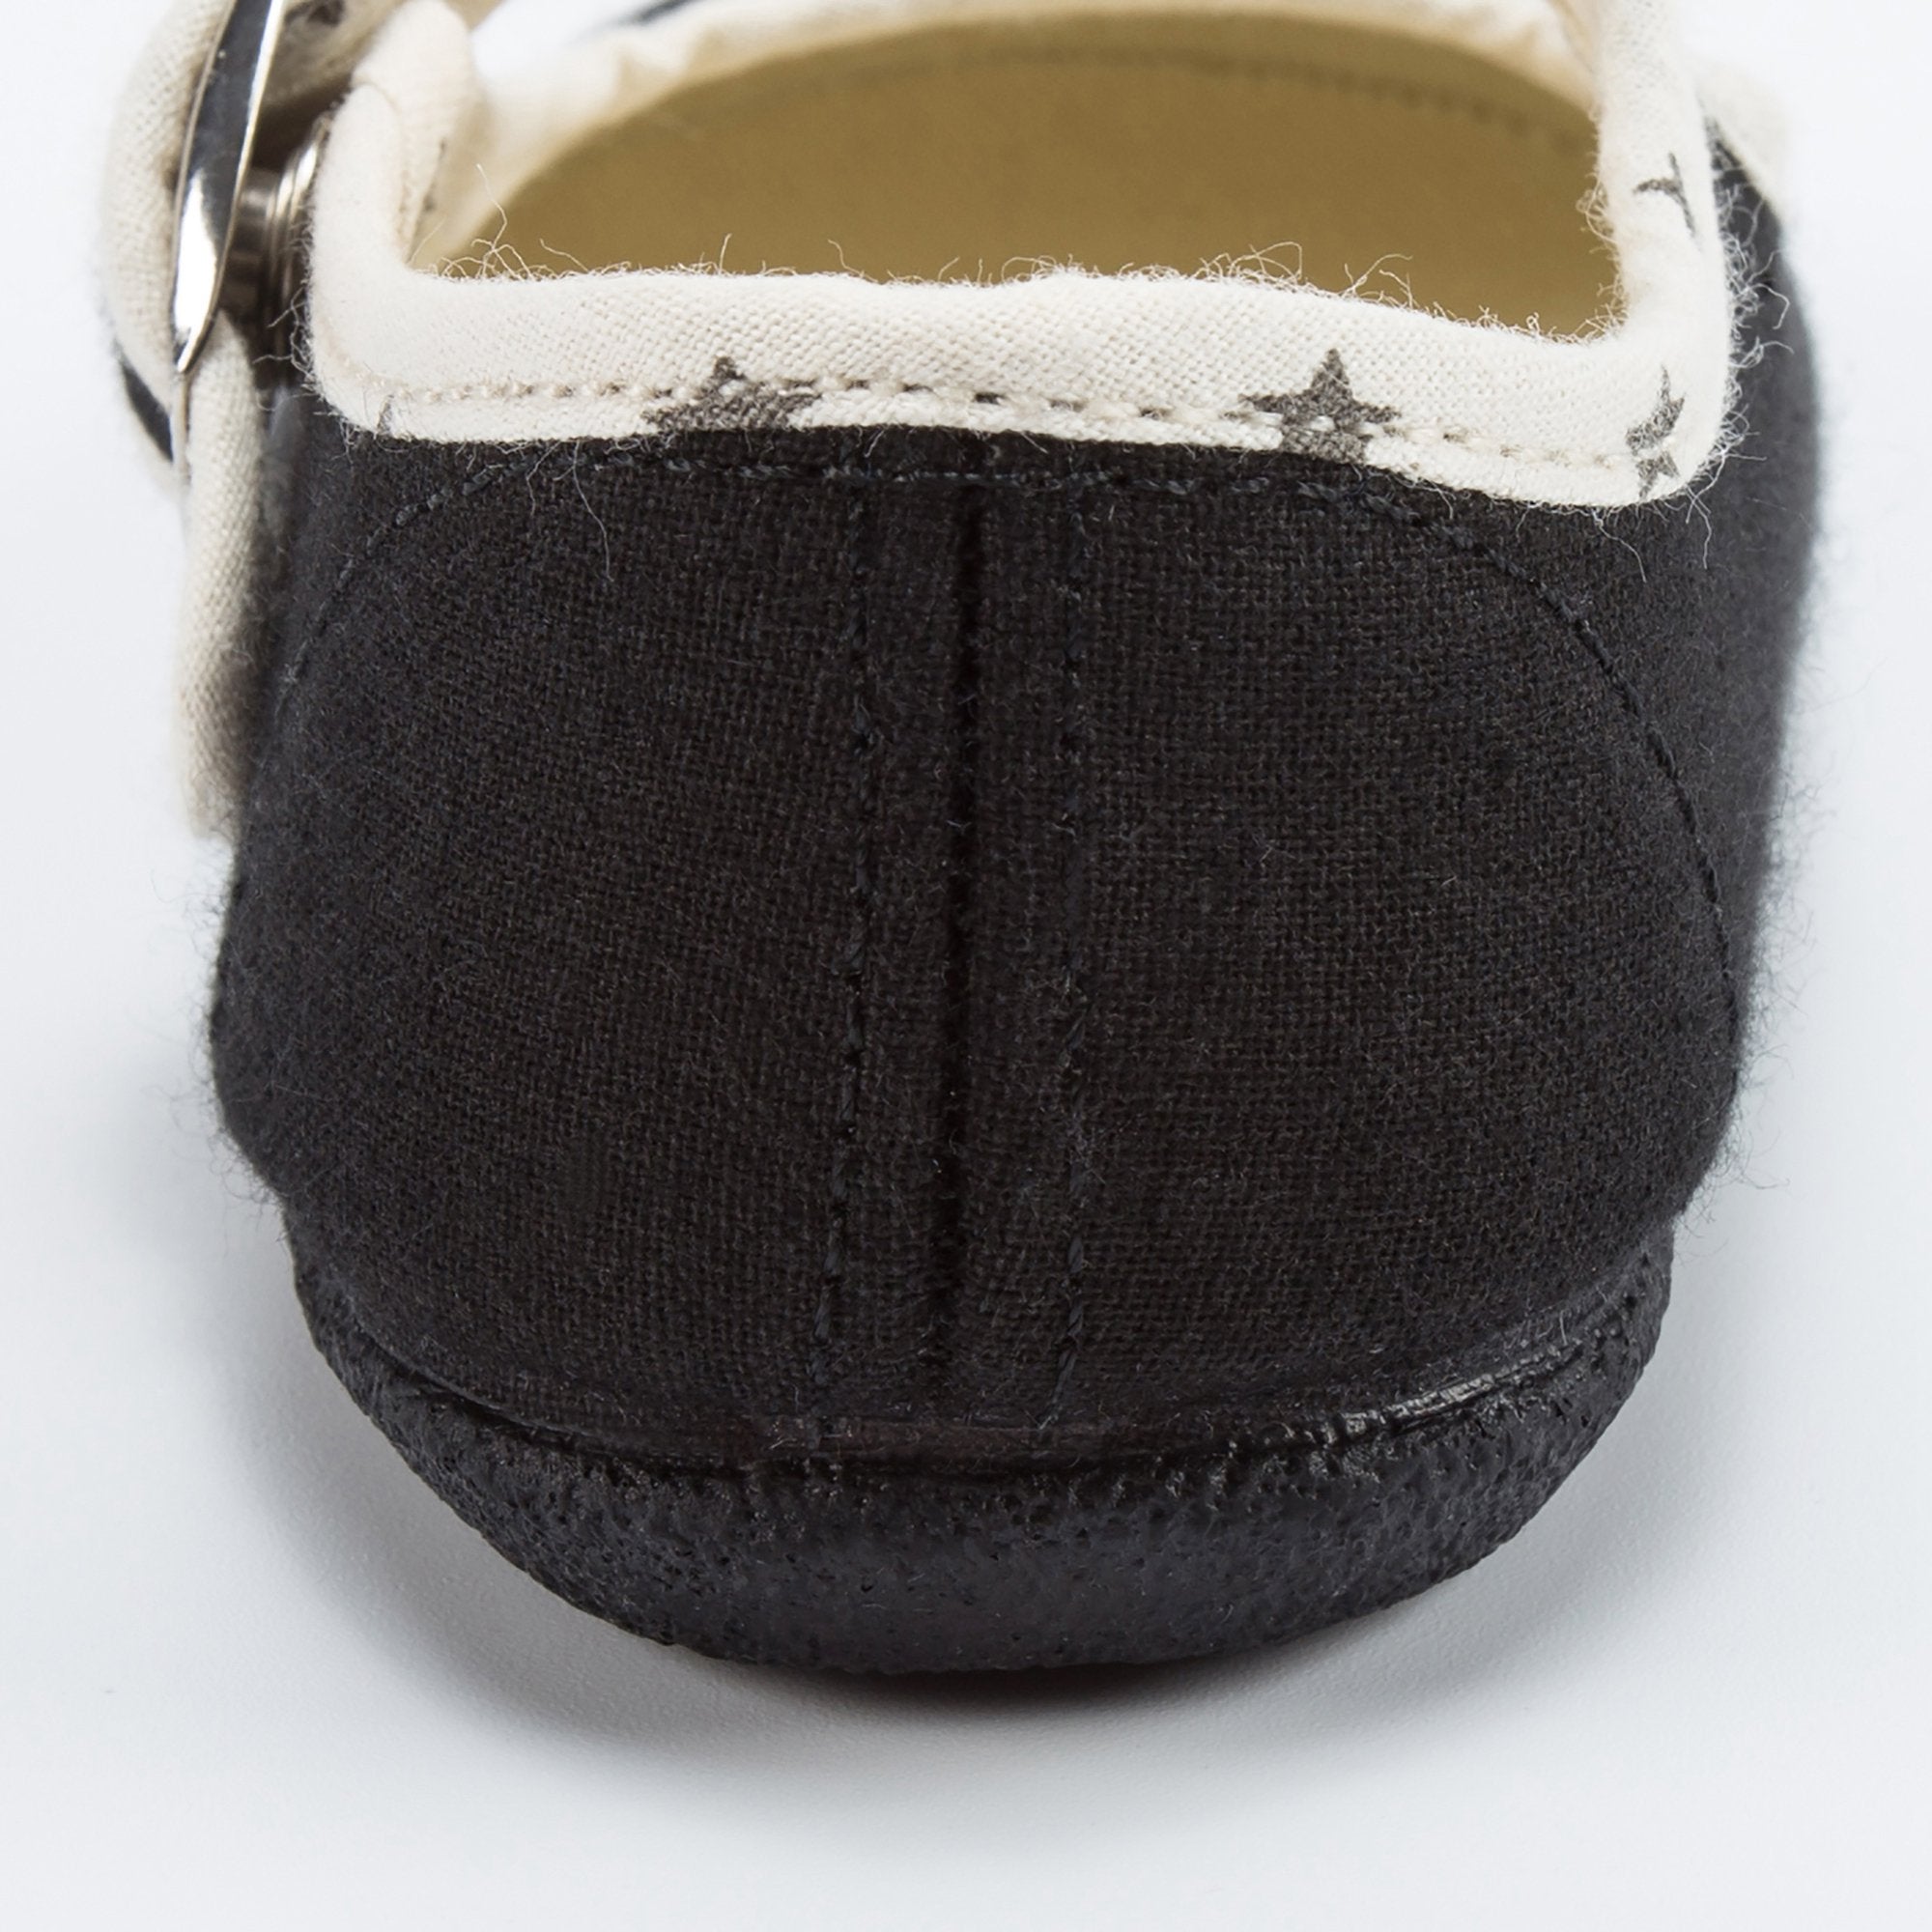 Baby Black Cotton Shoes